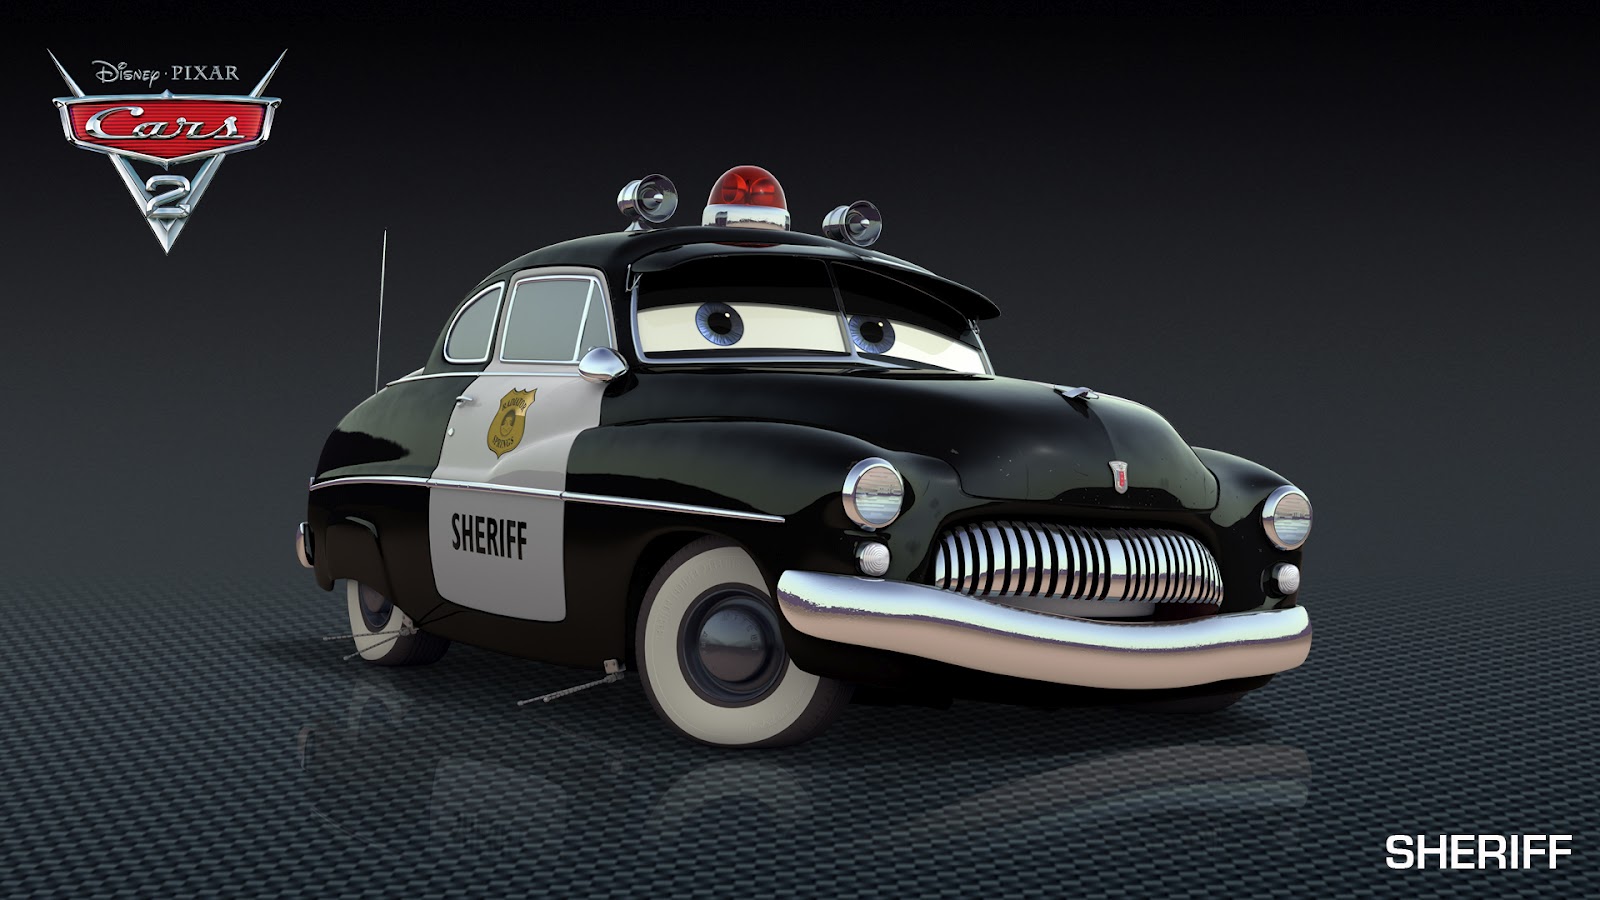 Disney Cars 2 Sheriff - HD Wallpaper 